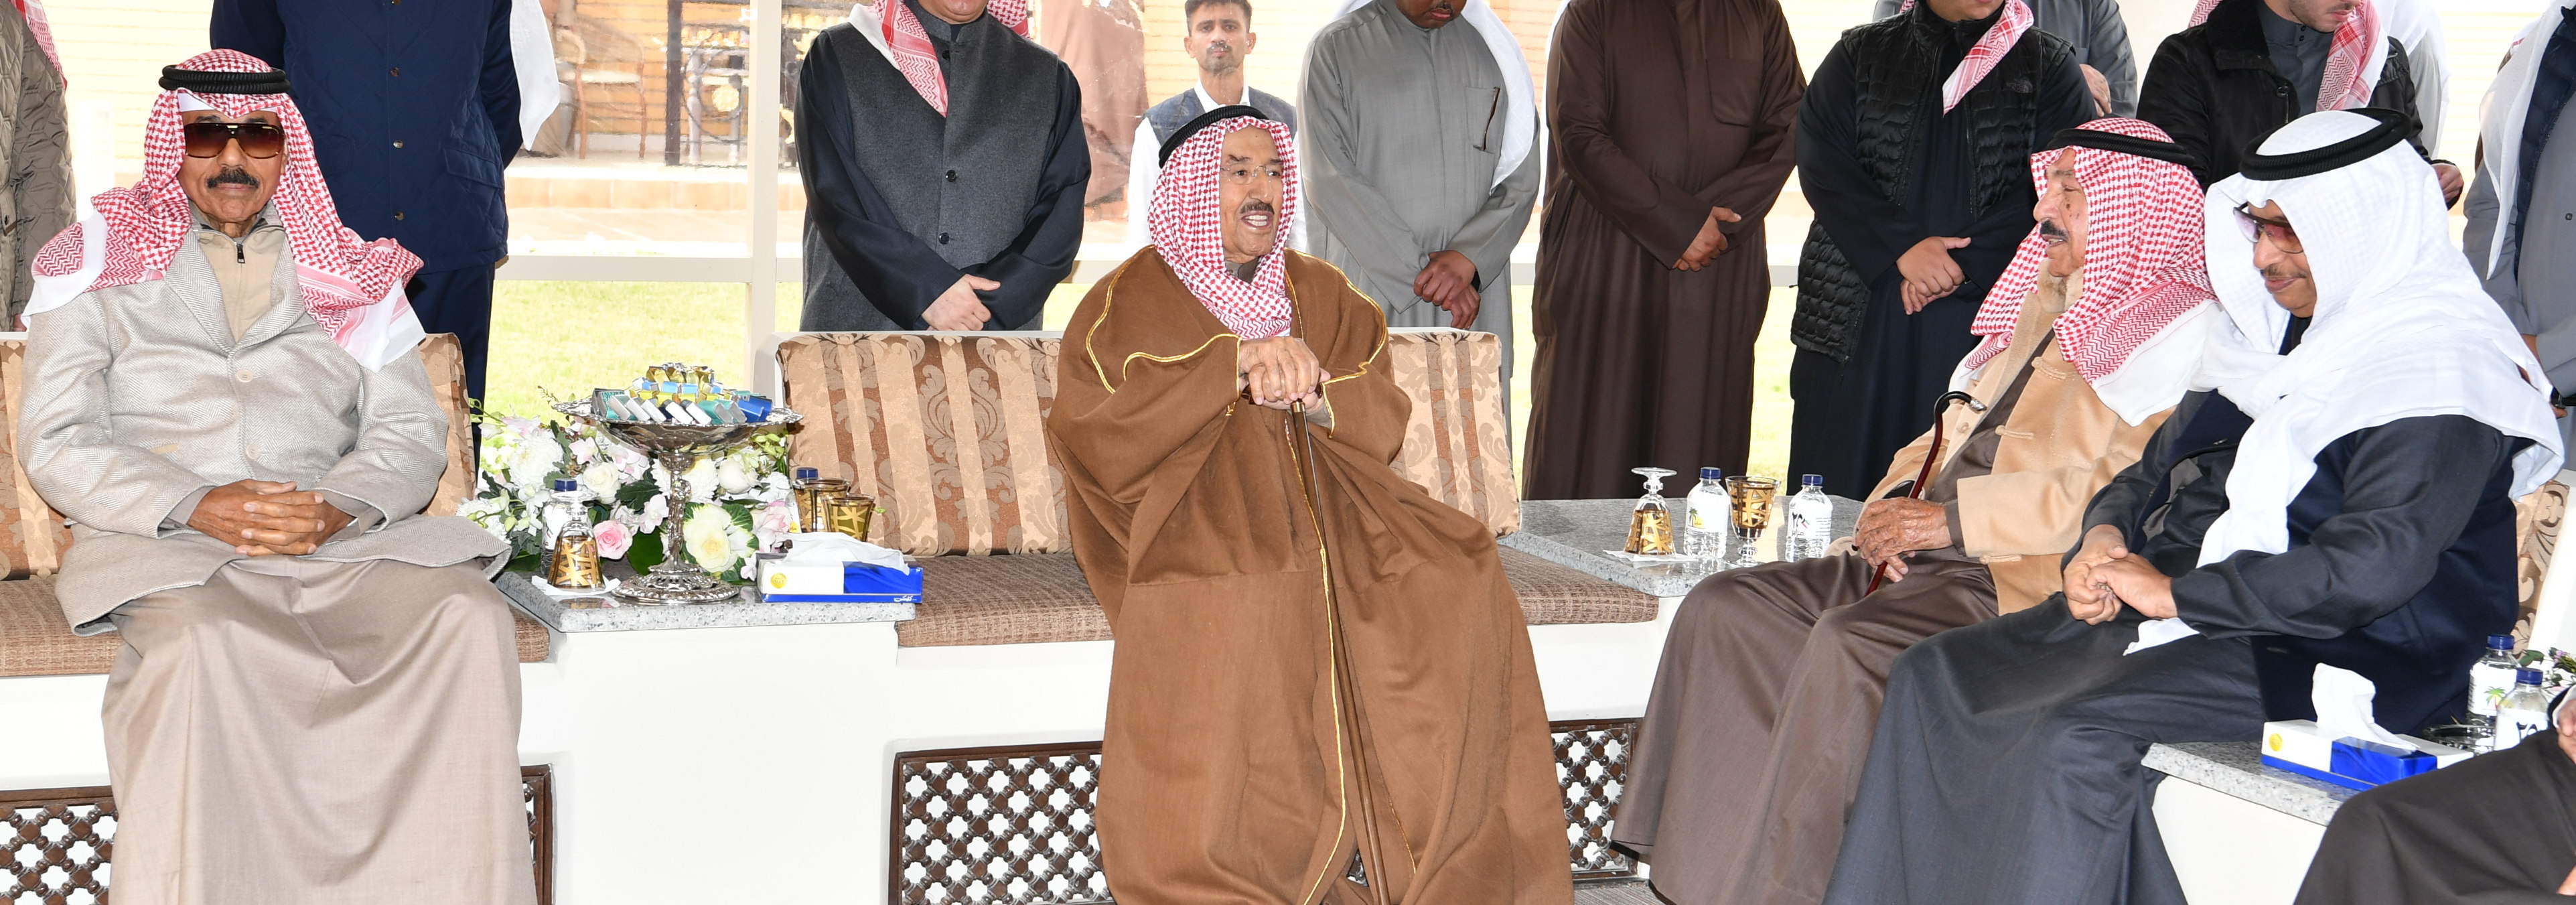 His Highness the Amir Sheikh Sabah Al-Ahmad Al-Jaber Al-Sabah attends a luncheon in His Highness's honor hosted by Sheikh Ali Al-Ahmad Al-Jaber Al-Sabah, at Azayez Farm